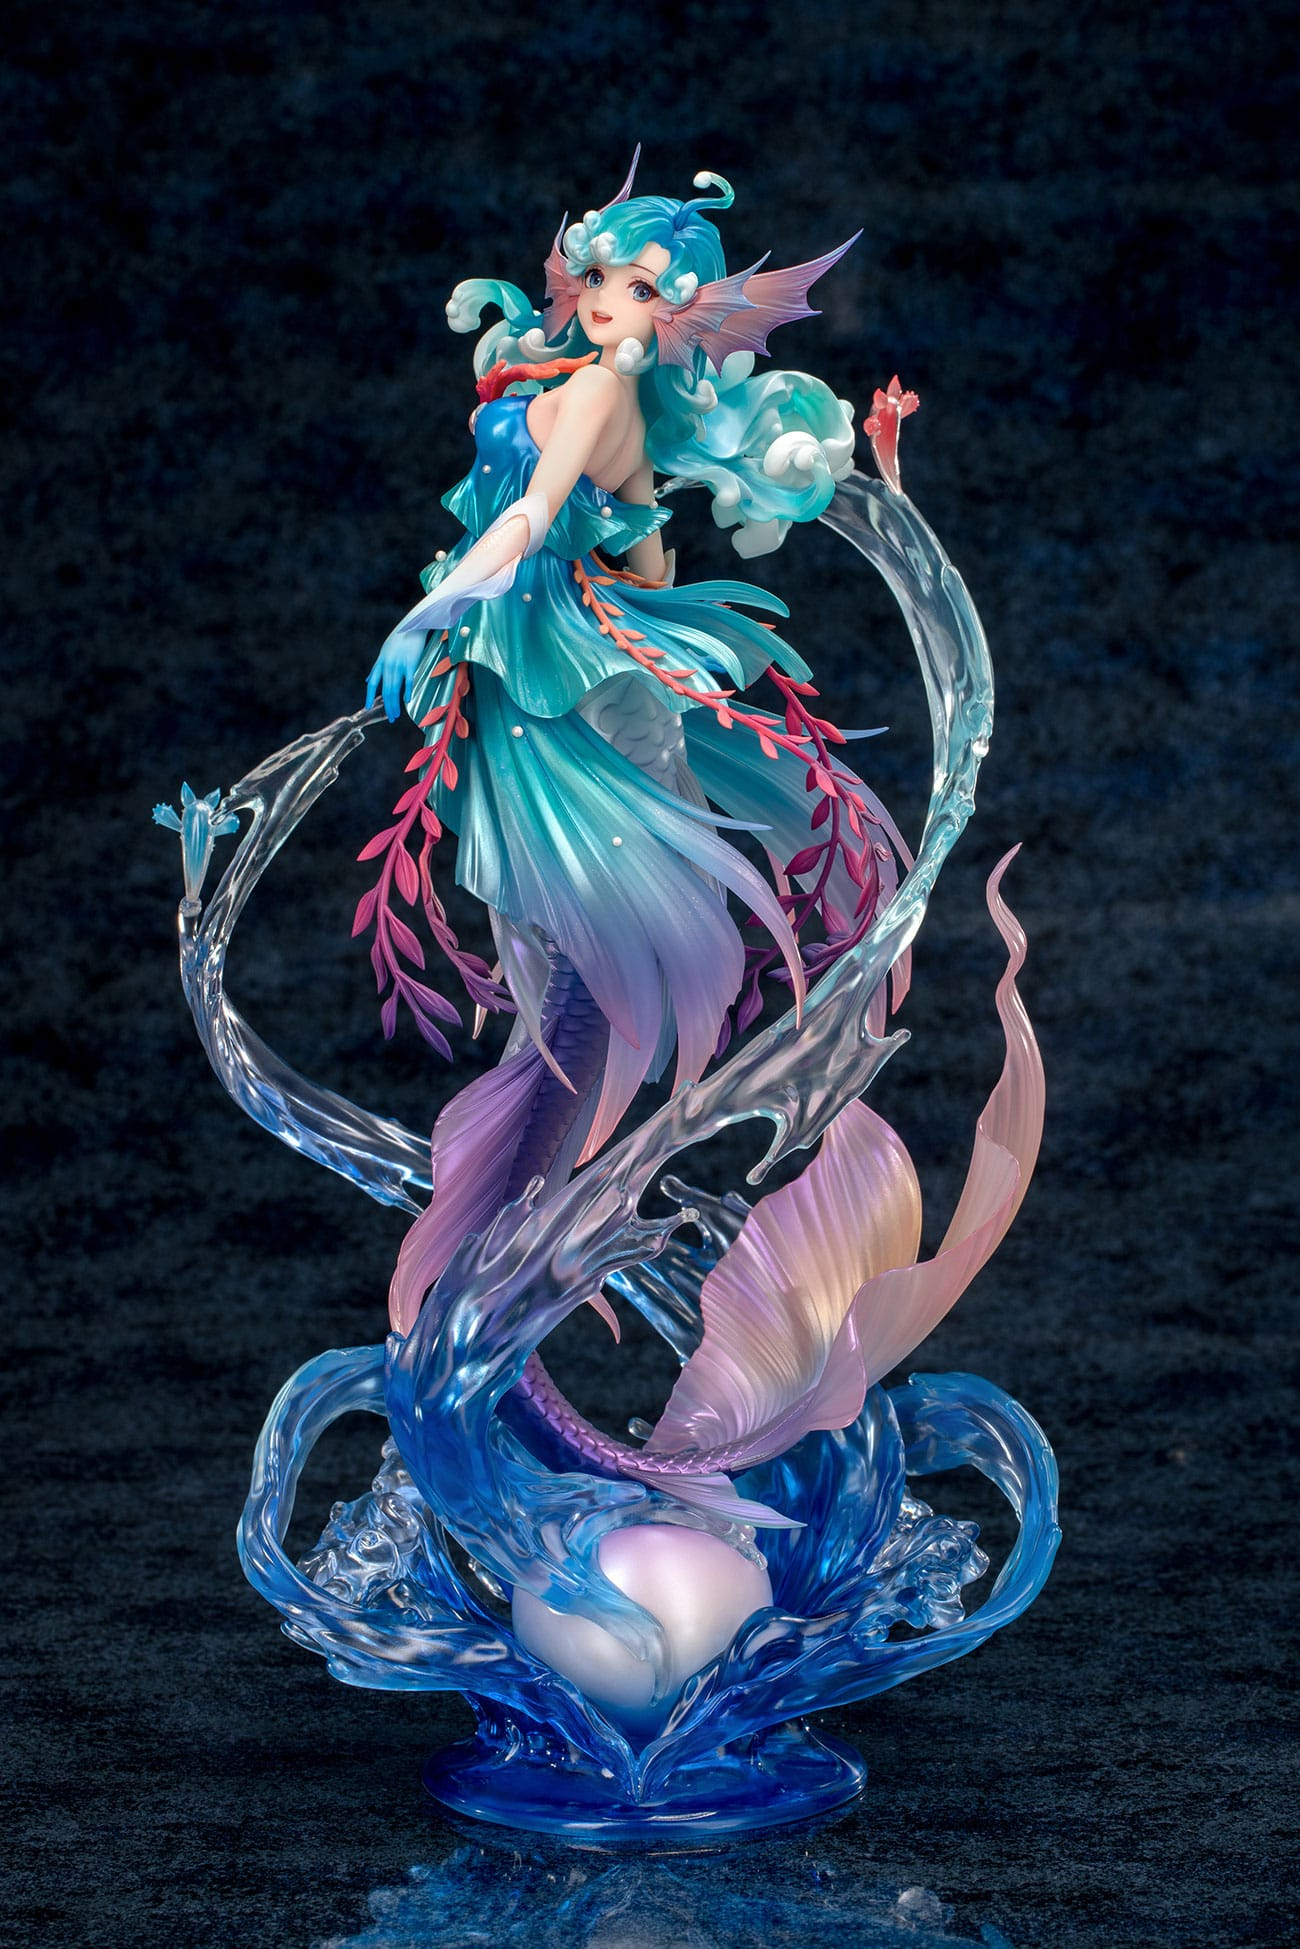 Honor of Kings - Mermaid Princess Doria - 32cm PVC Statue 1/8